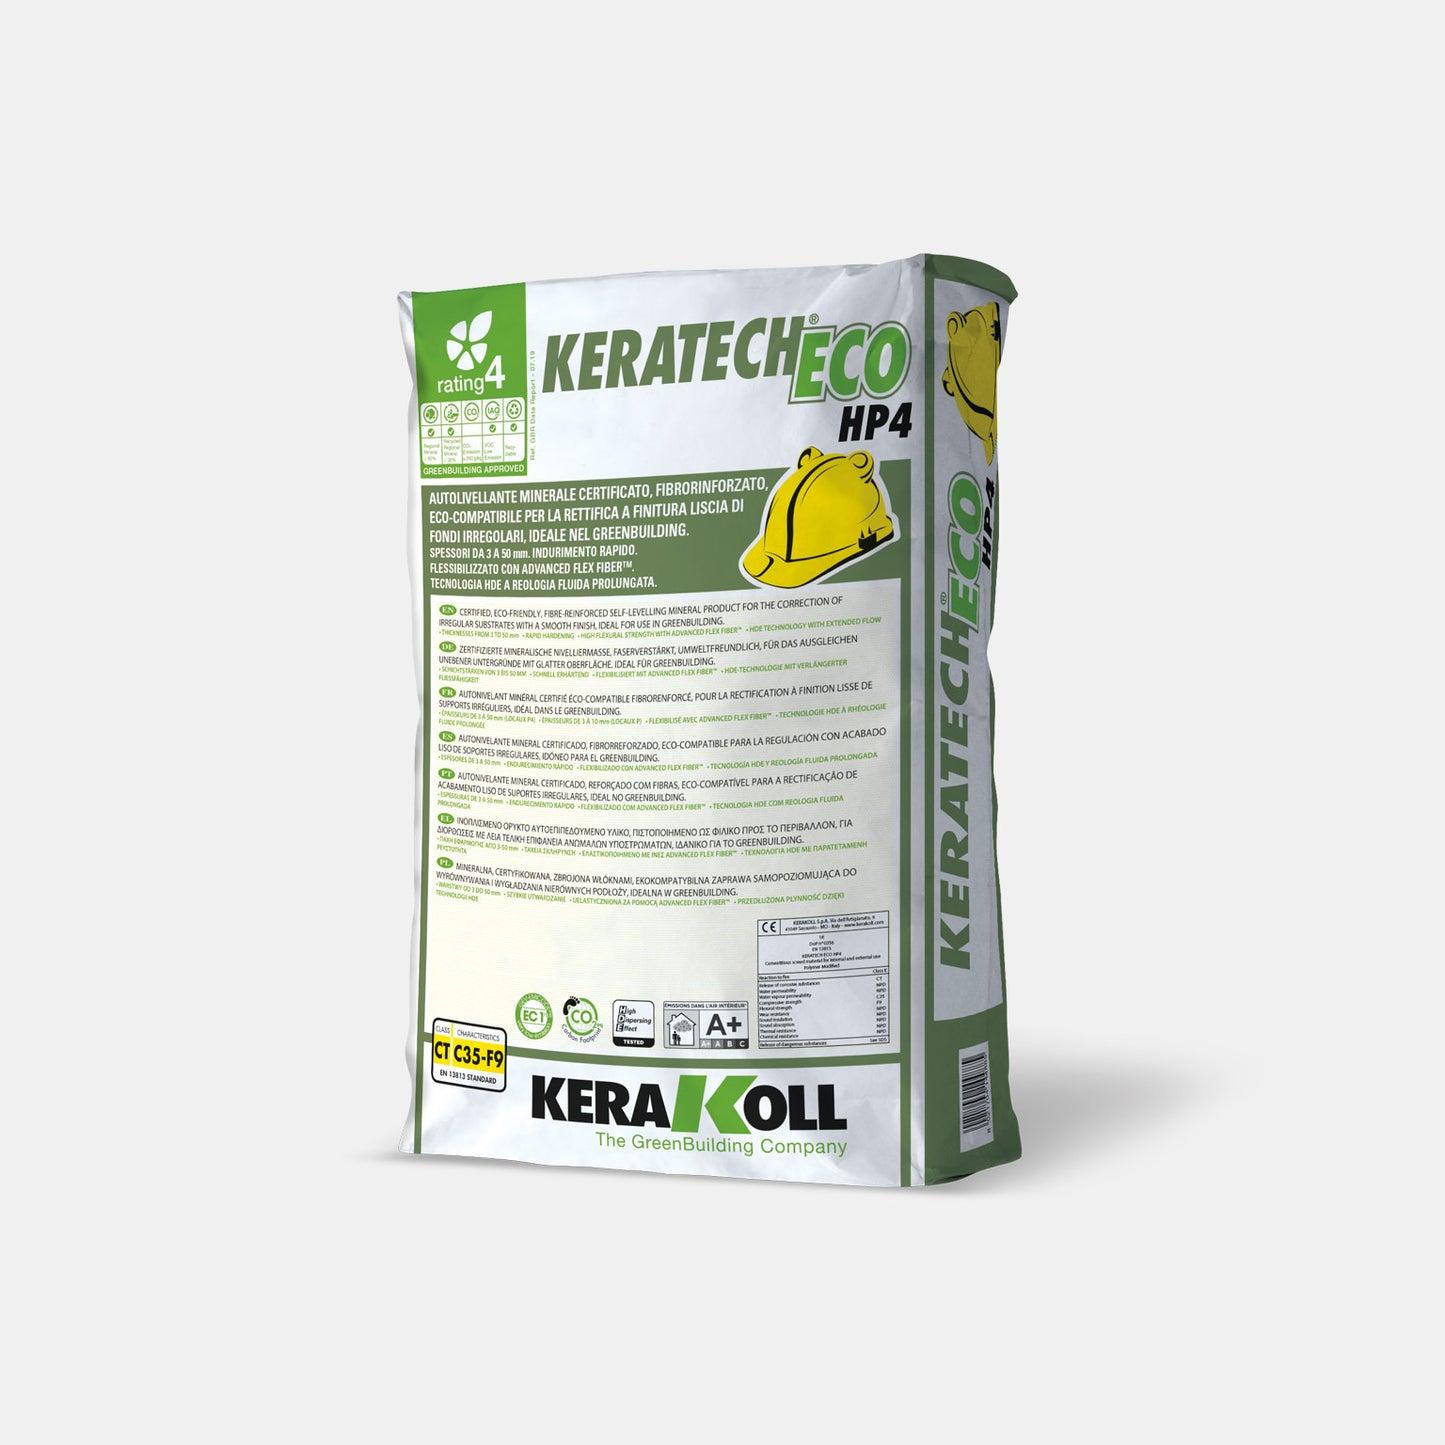 Keratech® Eco HP4